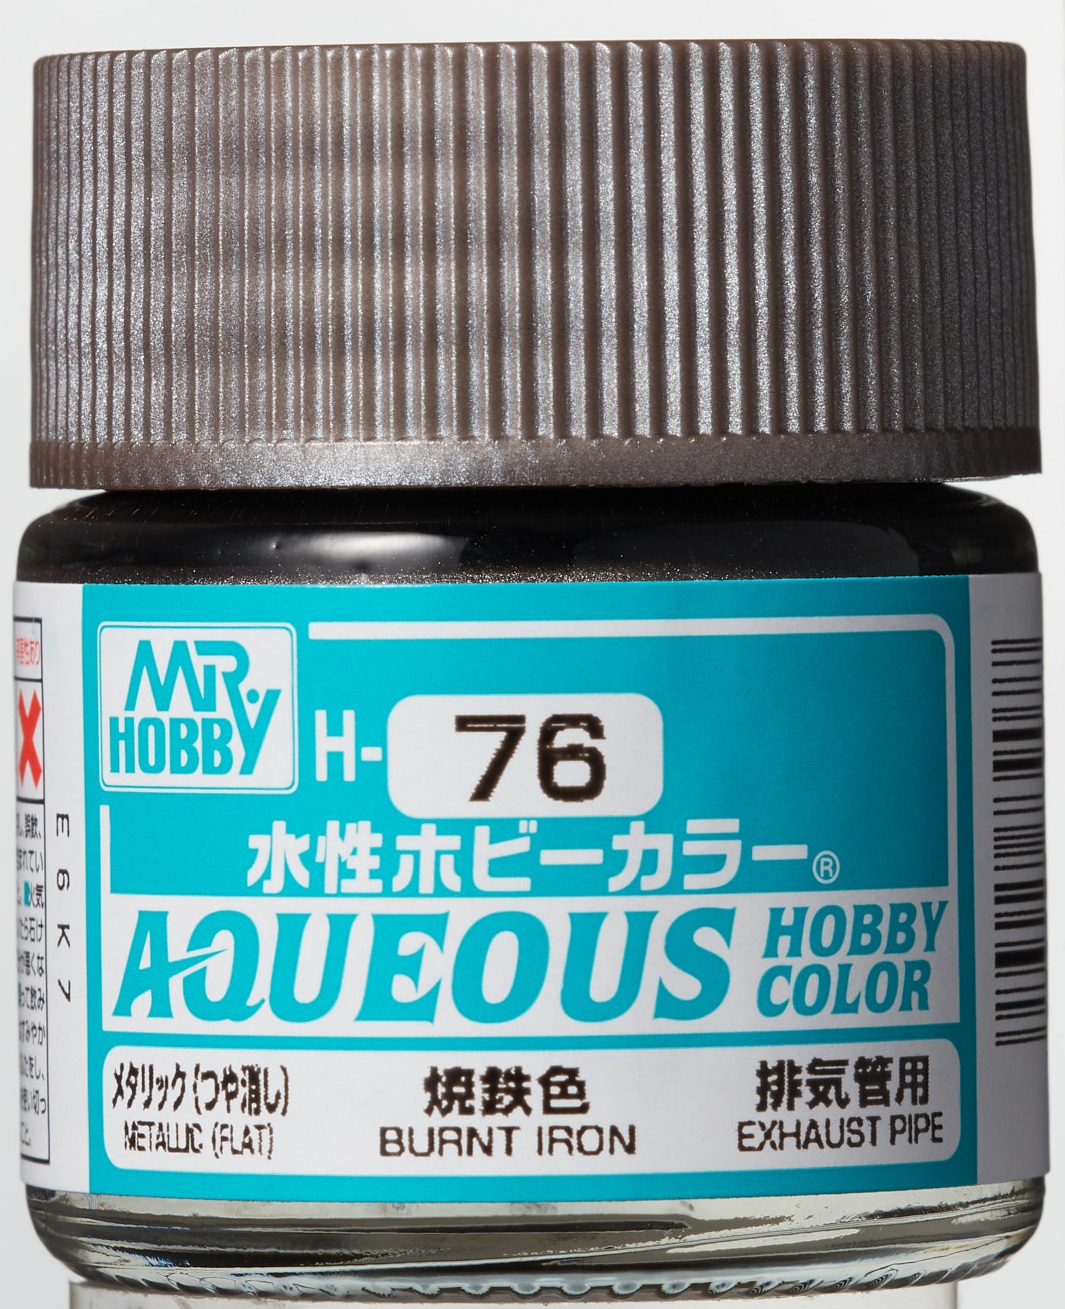 Mr. Aqueous Hobby Color - Burnt Iron  - H76 - Verbranntes Eisen